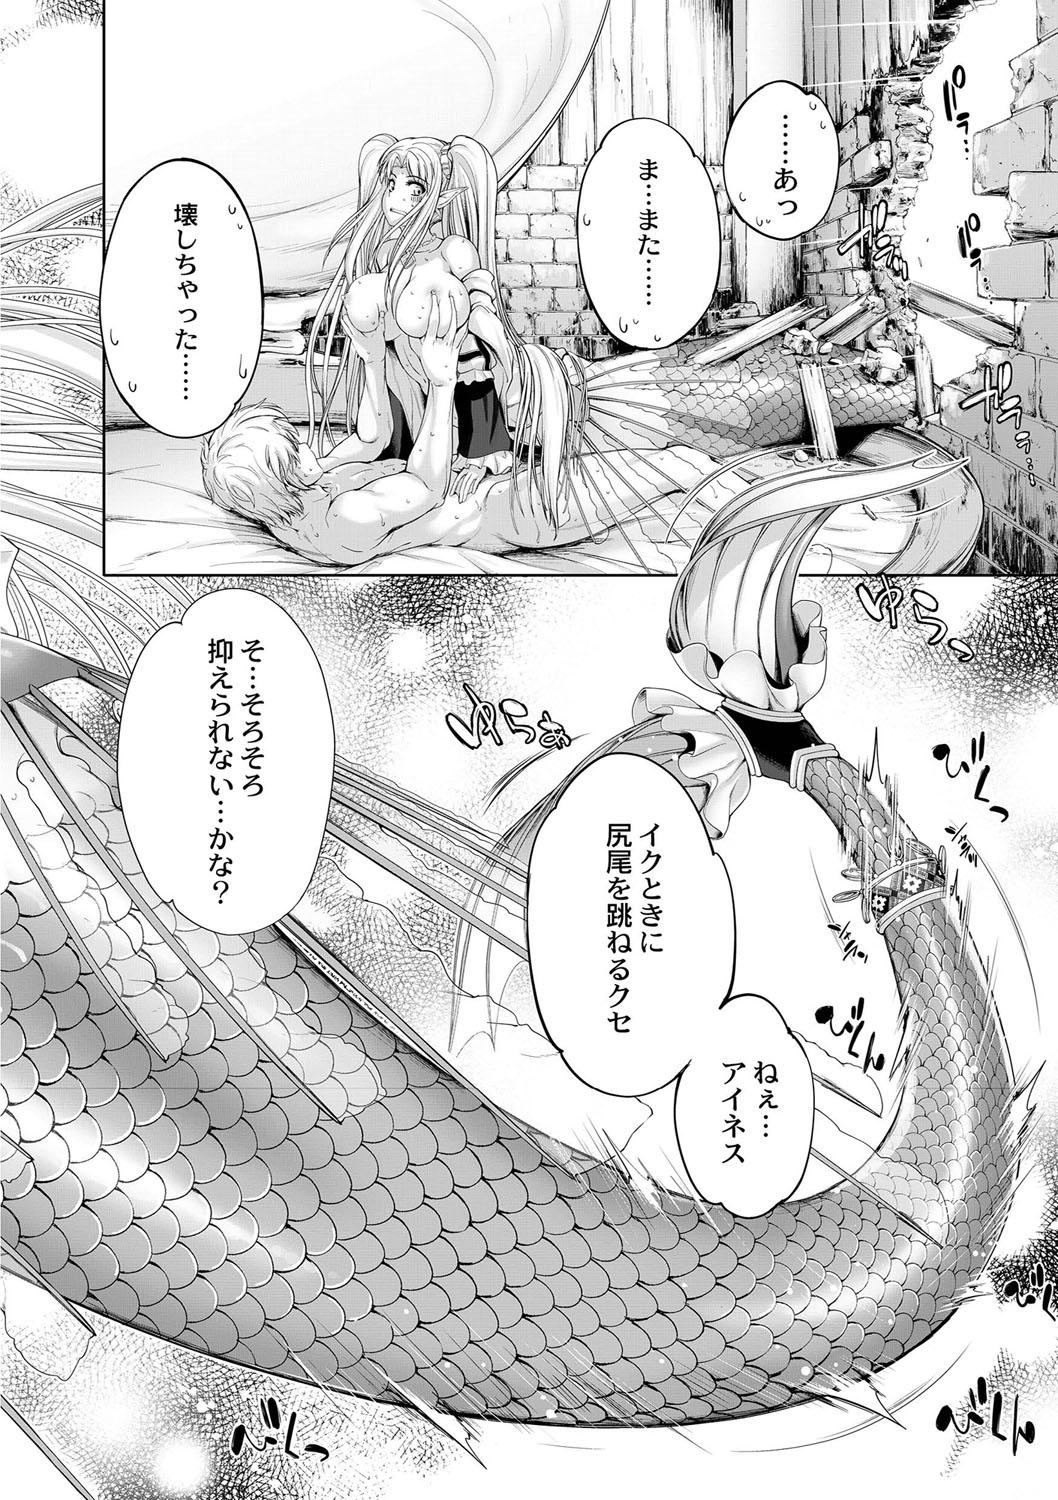 Tats Monster Girls no Koiro Circus Closeups - Page 5